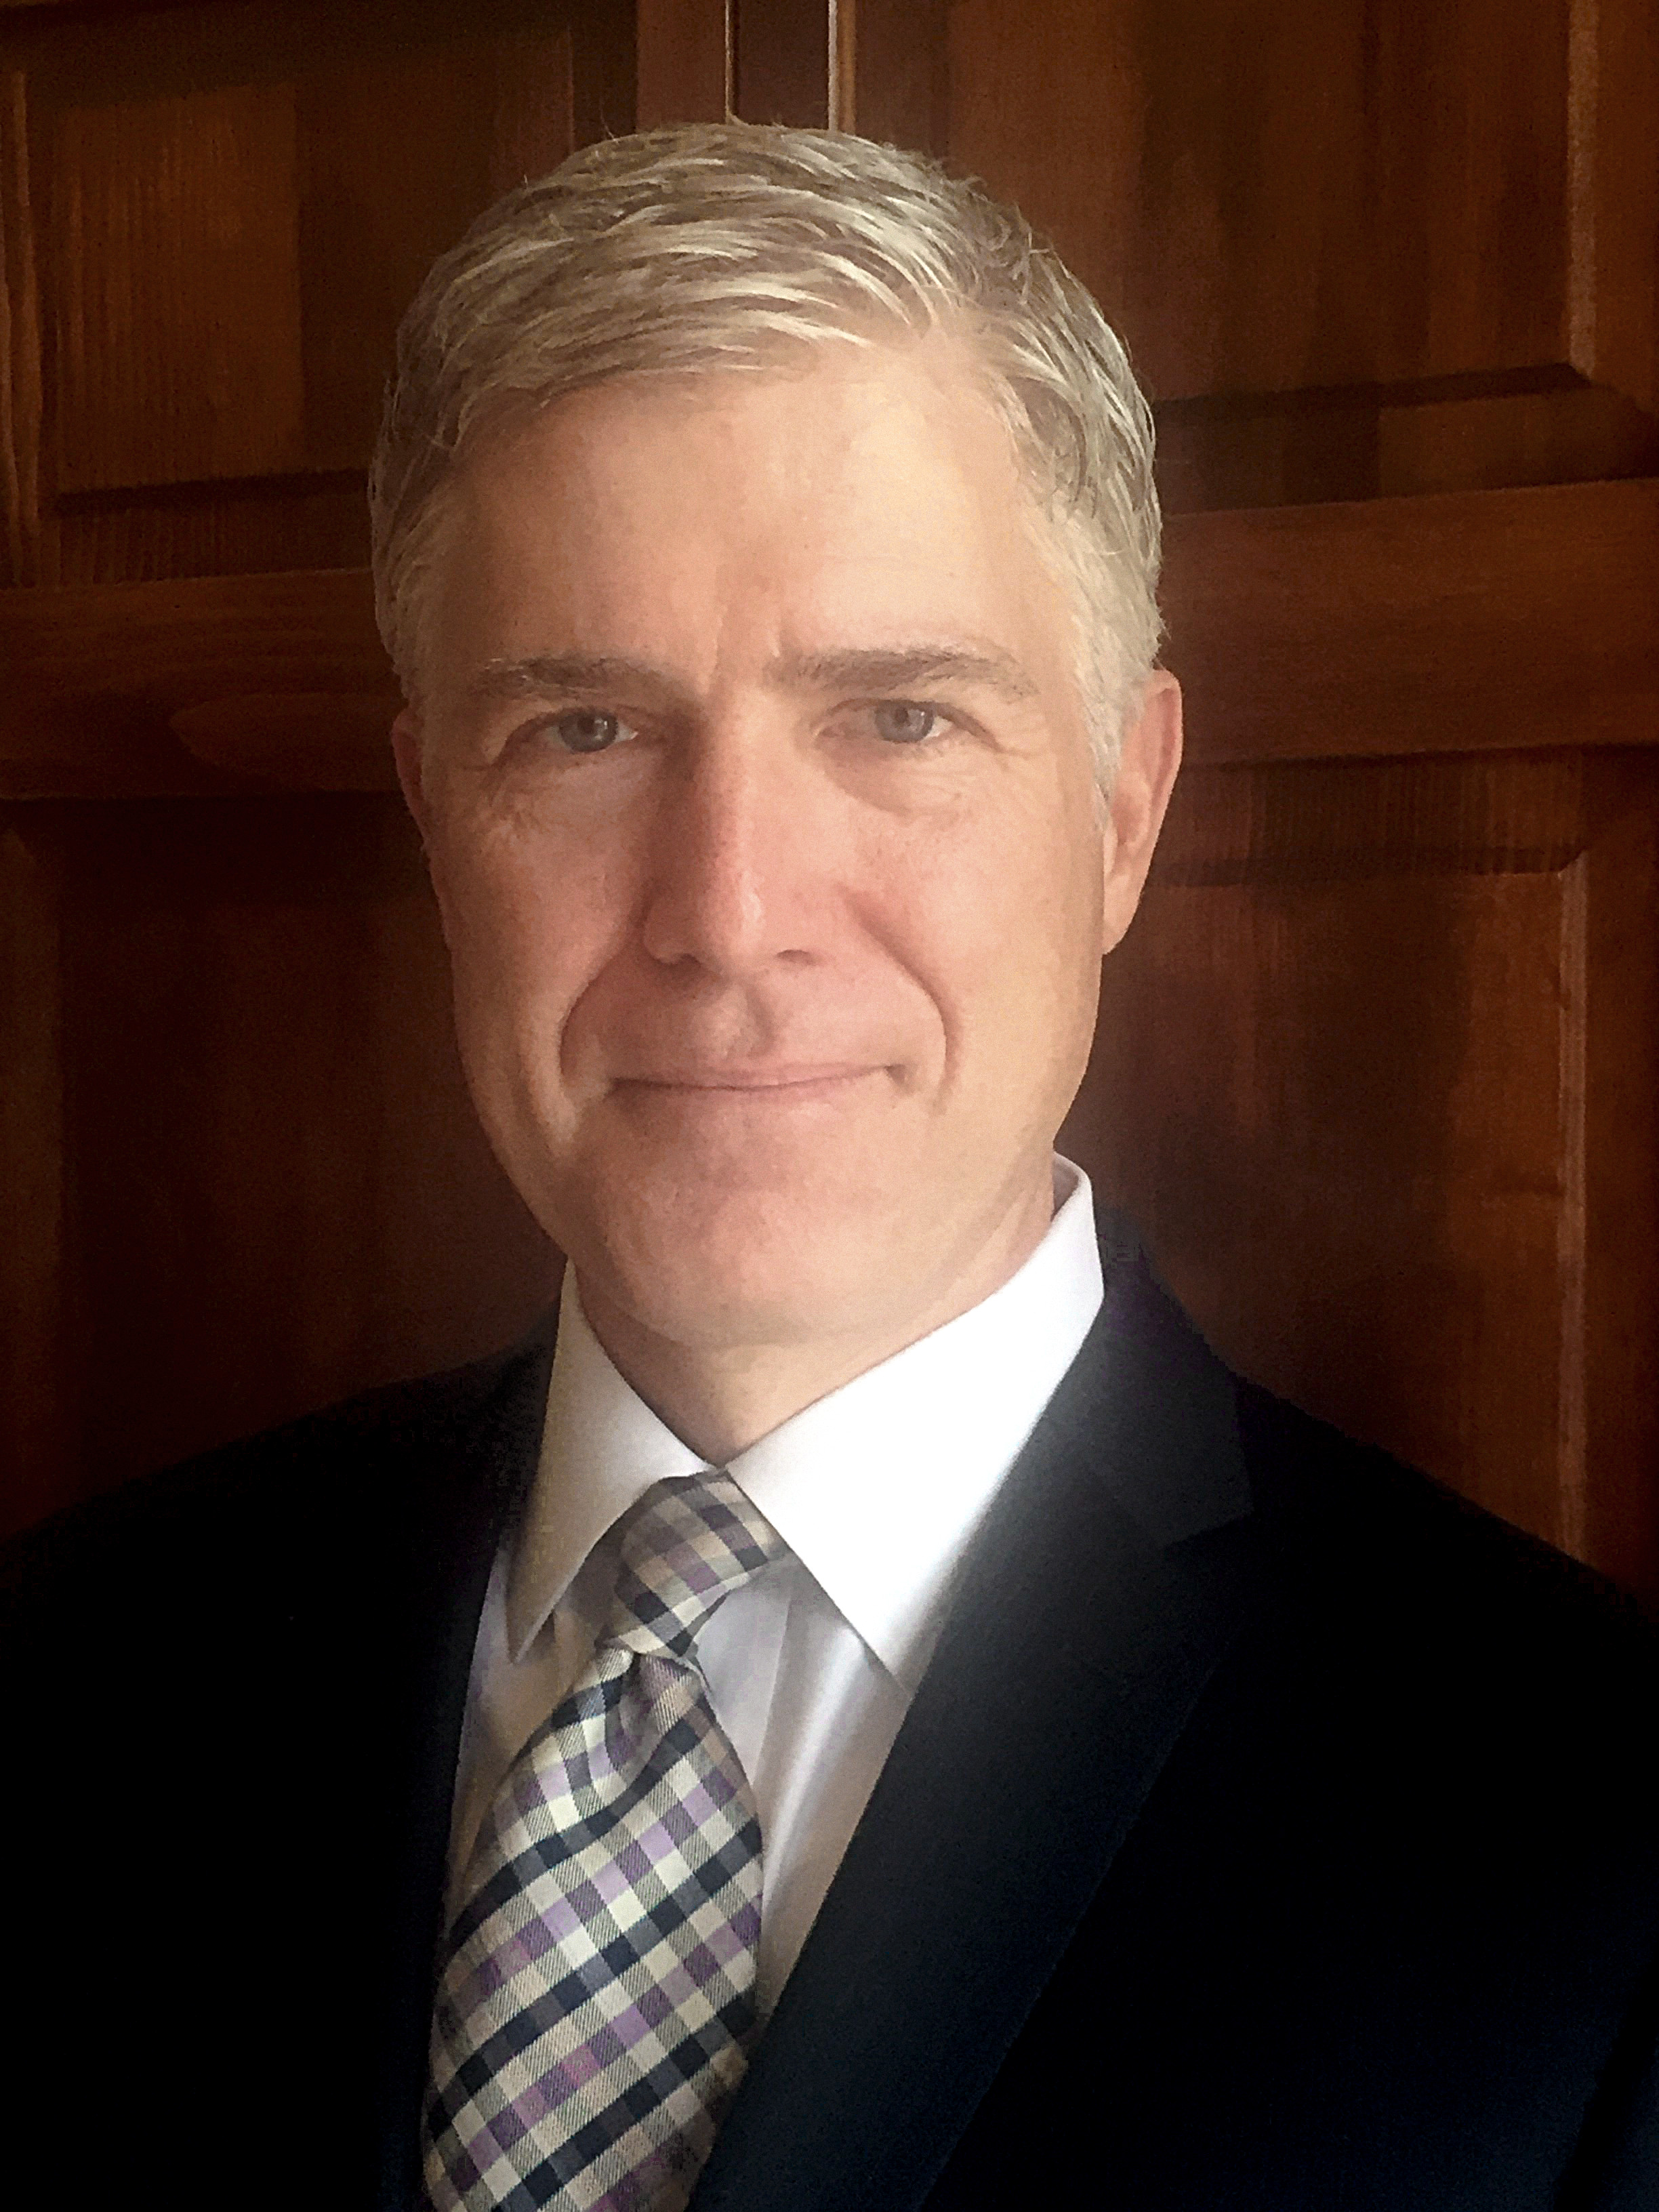 Donald Trump's nominee for the U.S. Supreme Court, Neil Gorsuch